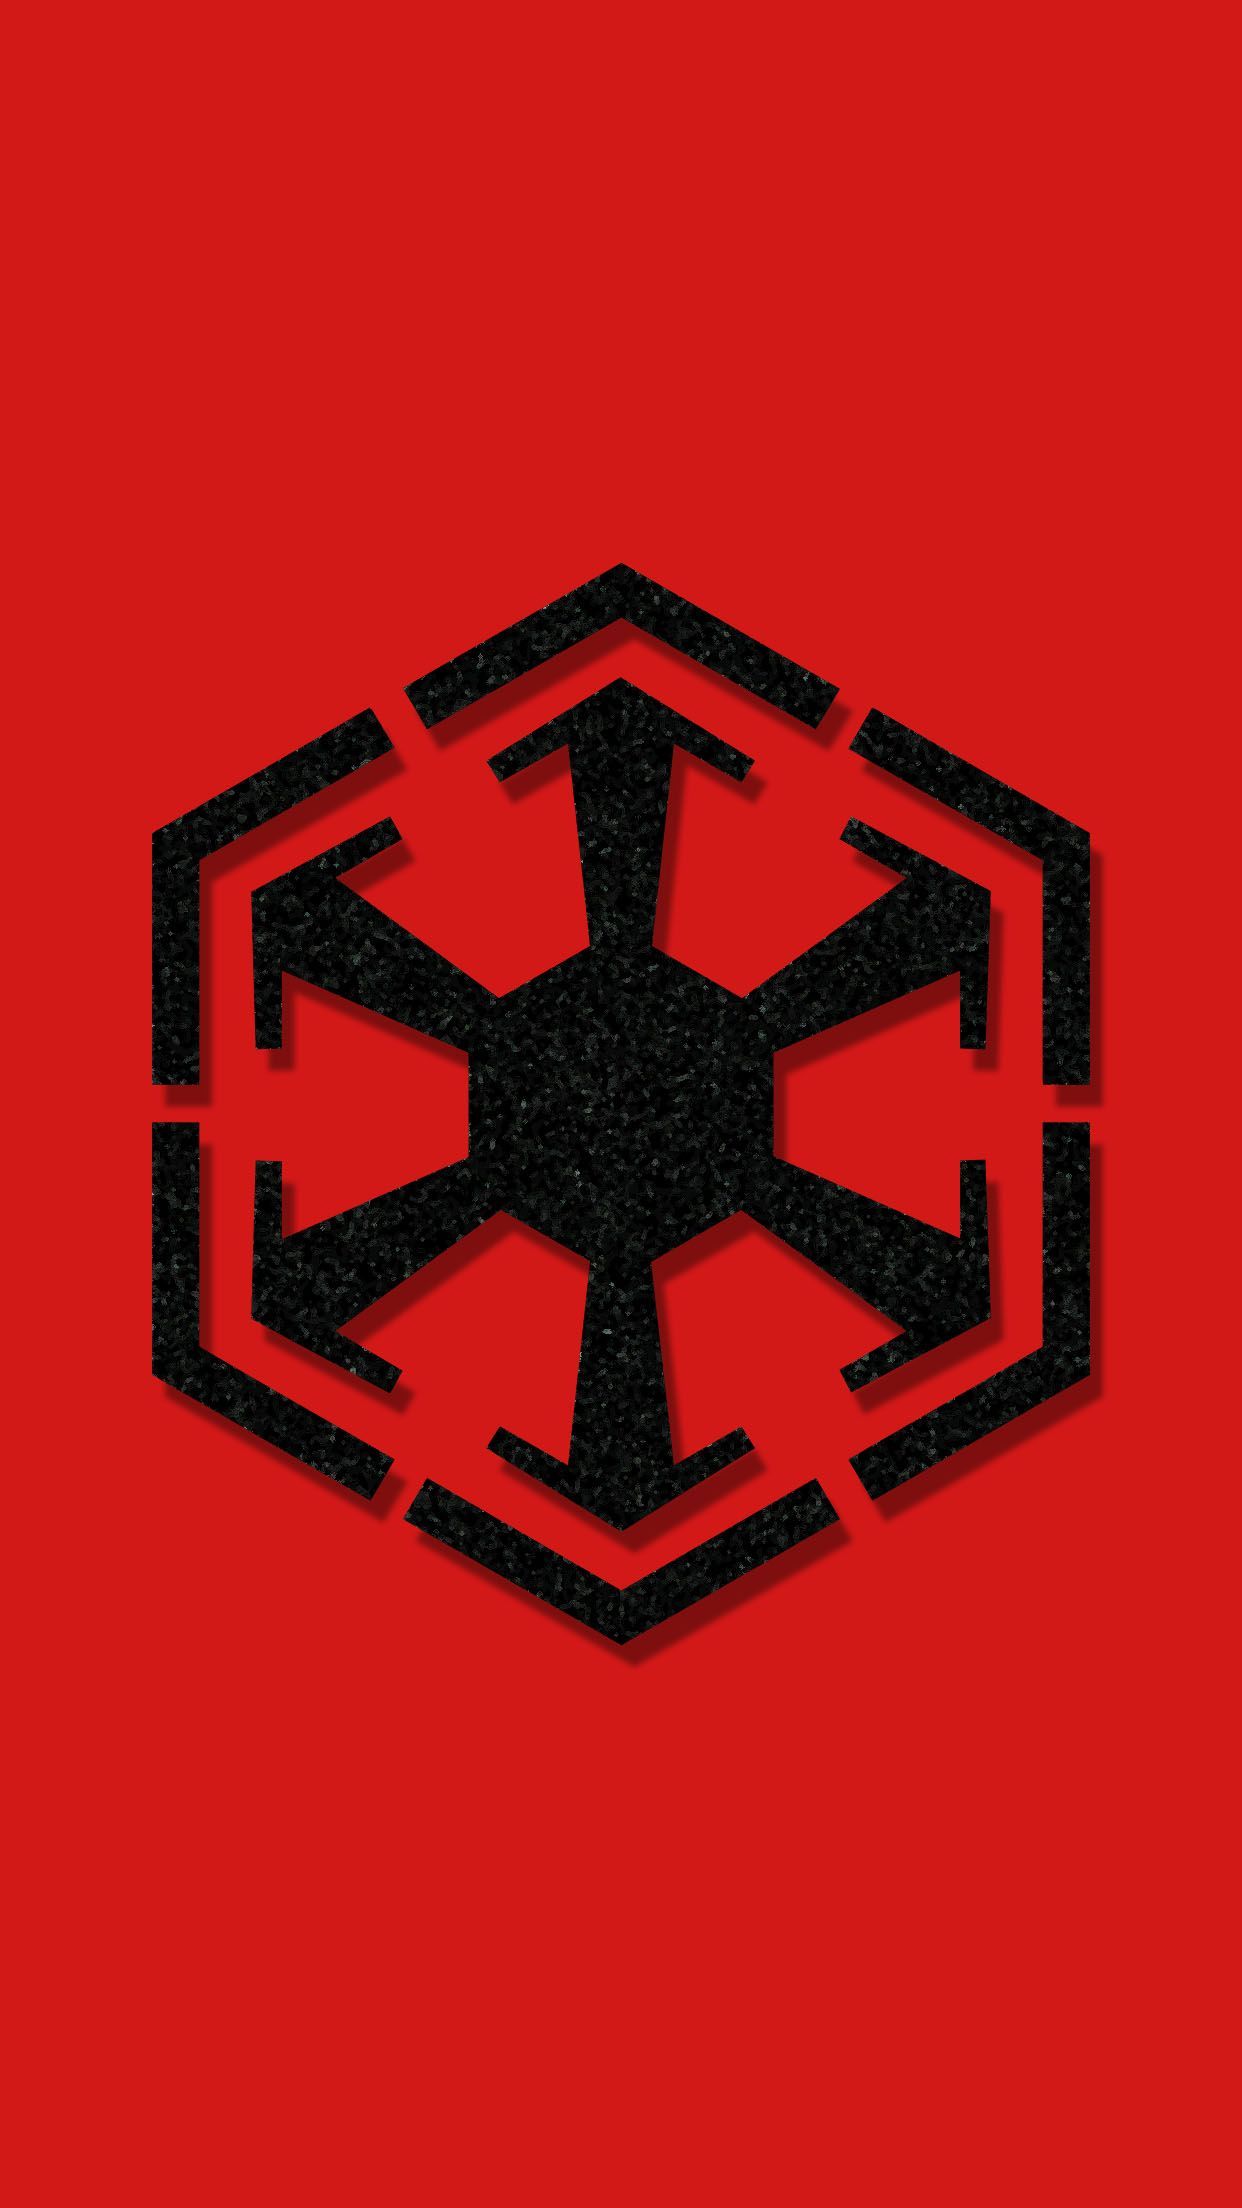 Star Wars Sith Empire Wallpaper Desktop On Wallpaper 1080p HD. Star wars sith empire, Star wars sith, Star wars decal